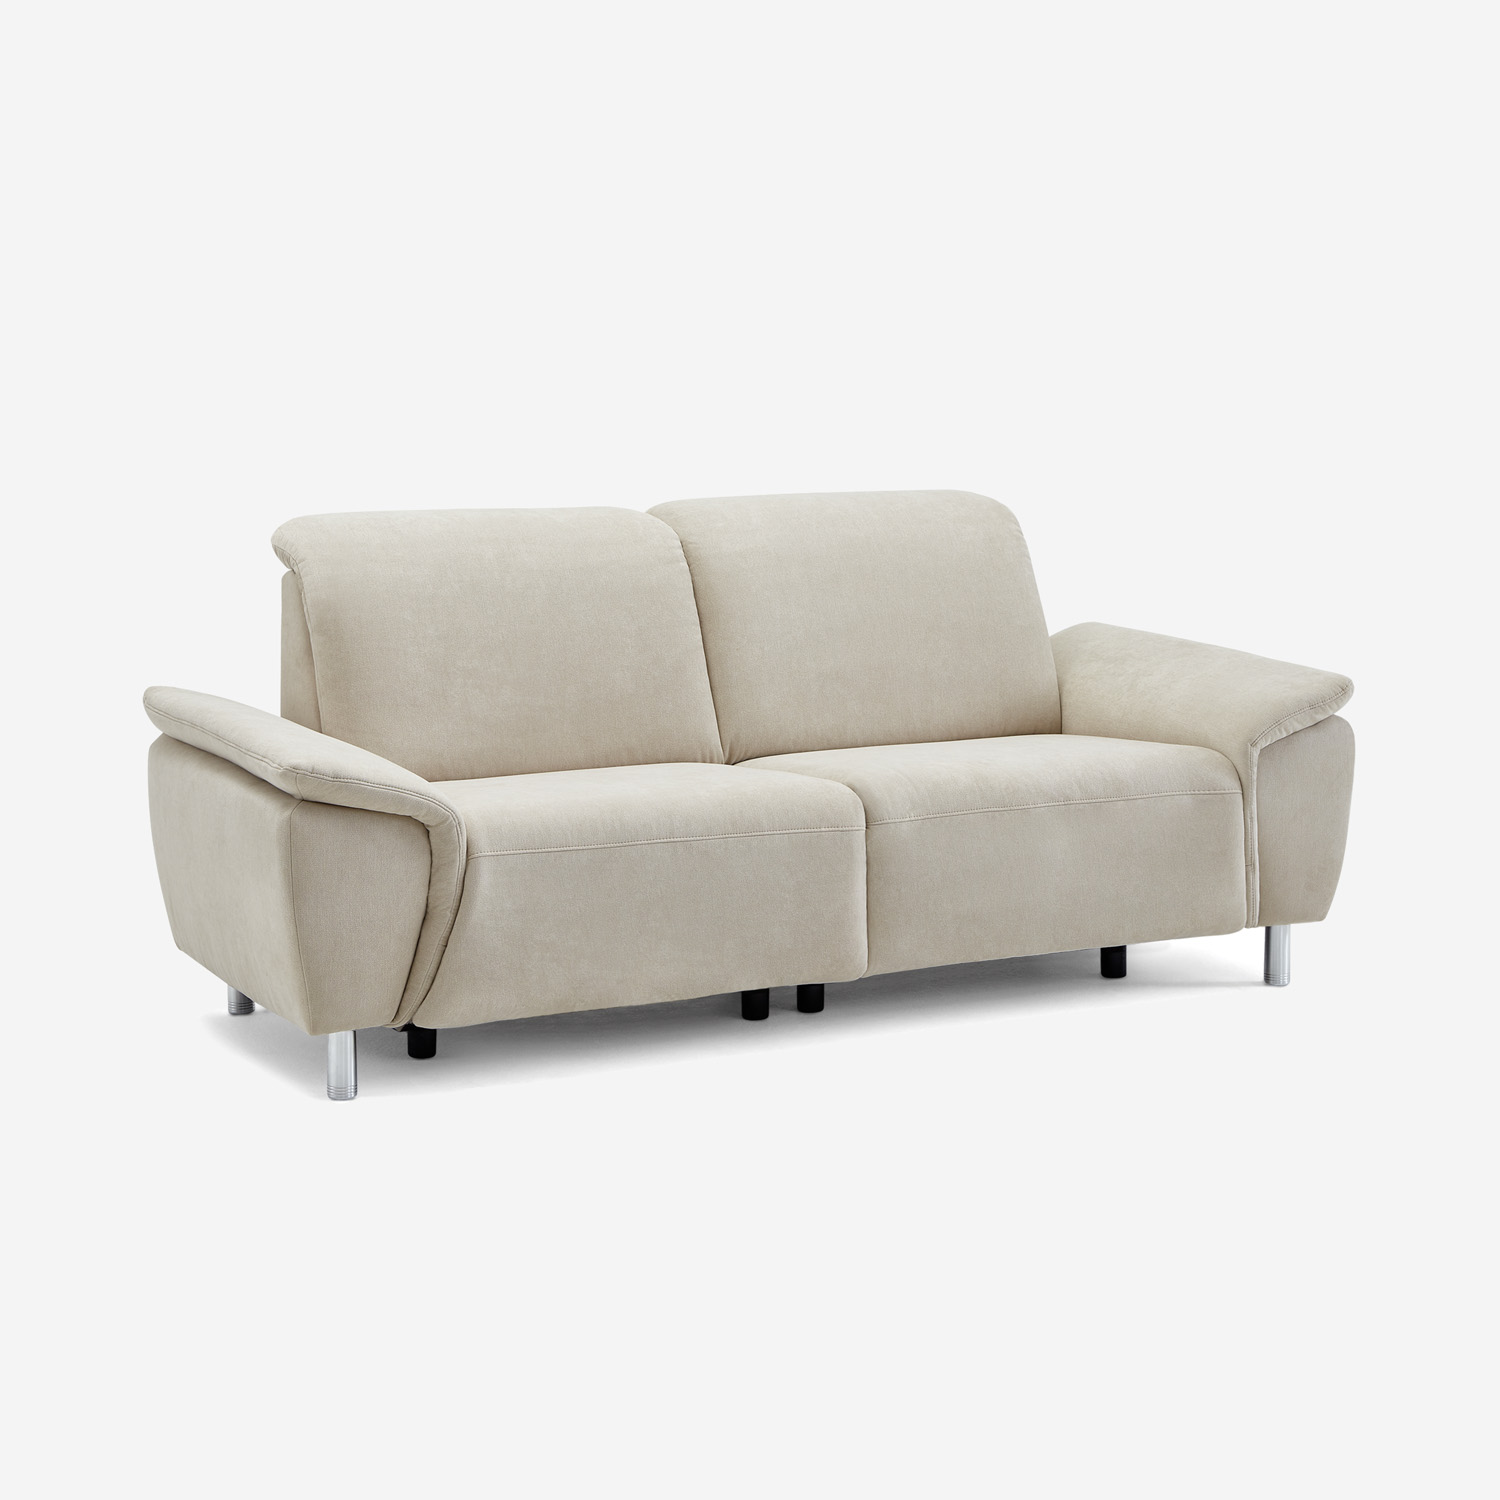 2-Sitzer Sofa Nell Relaxfunktion - Calizza motorischer mit Beige Interiors